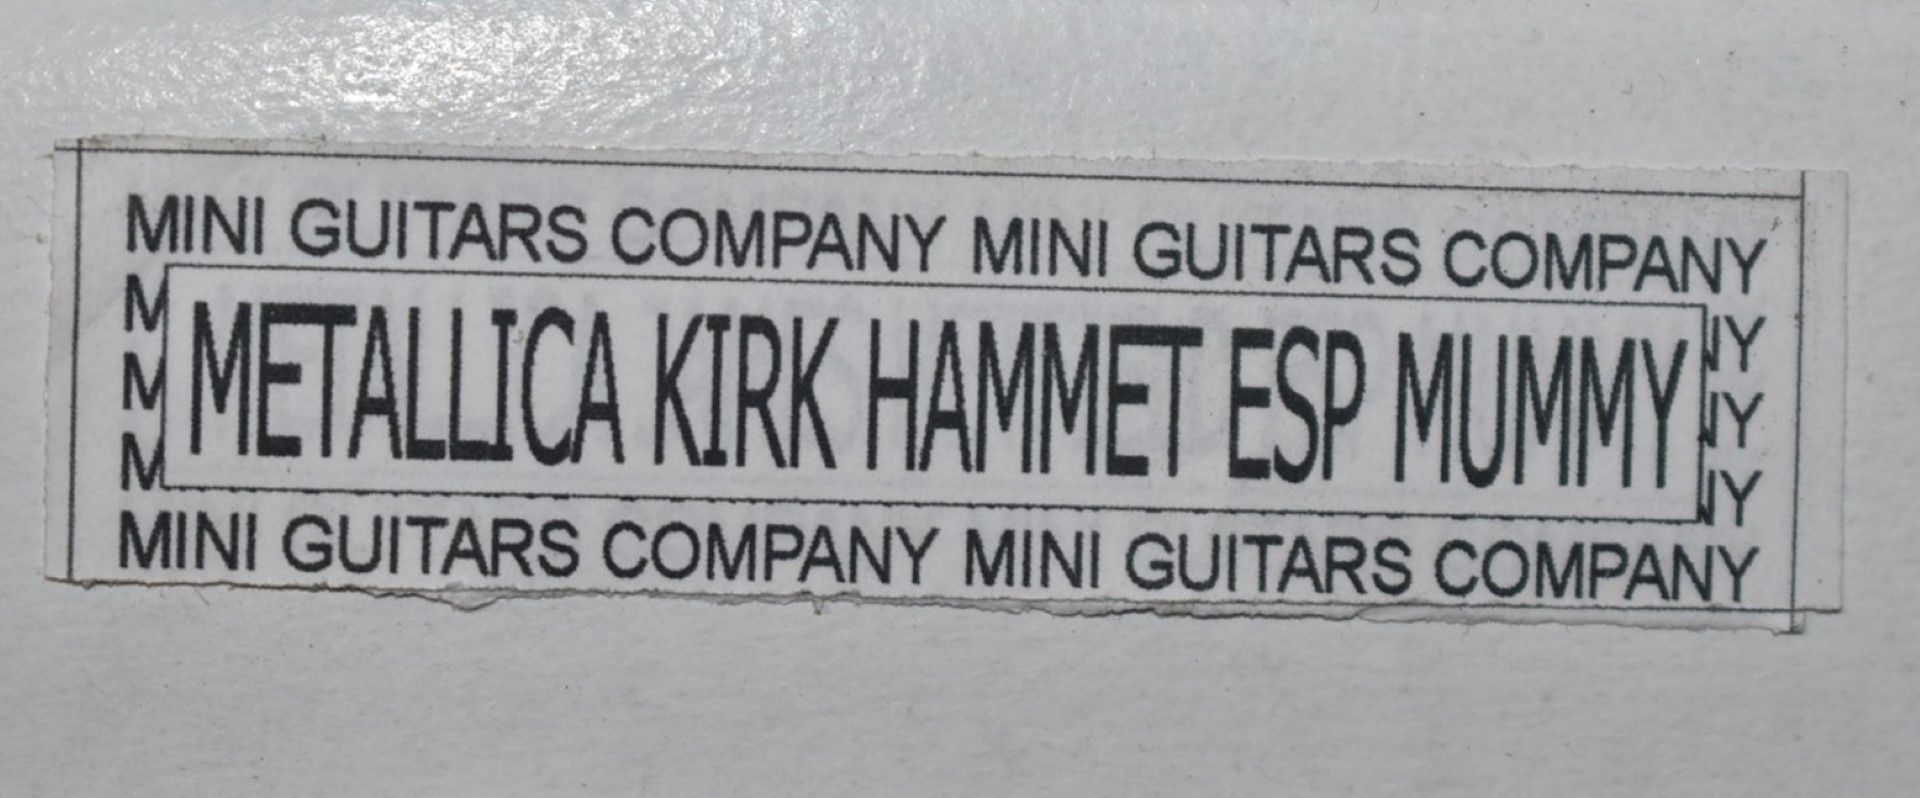 1 x Miniature Hand Made Guitar - Metallica Kirt Hammet ESP Mummy - New & Unused - RRP £35 - Image 5 of 5